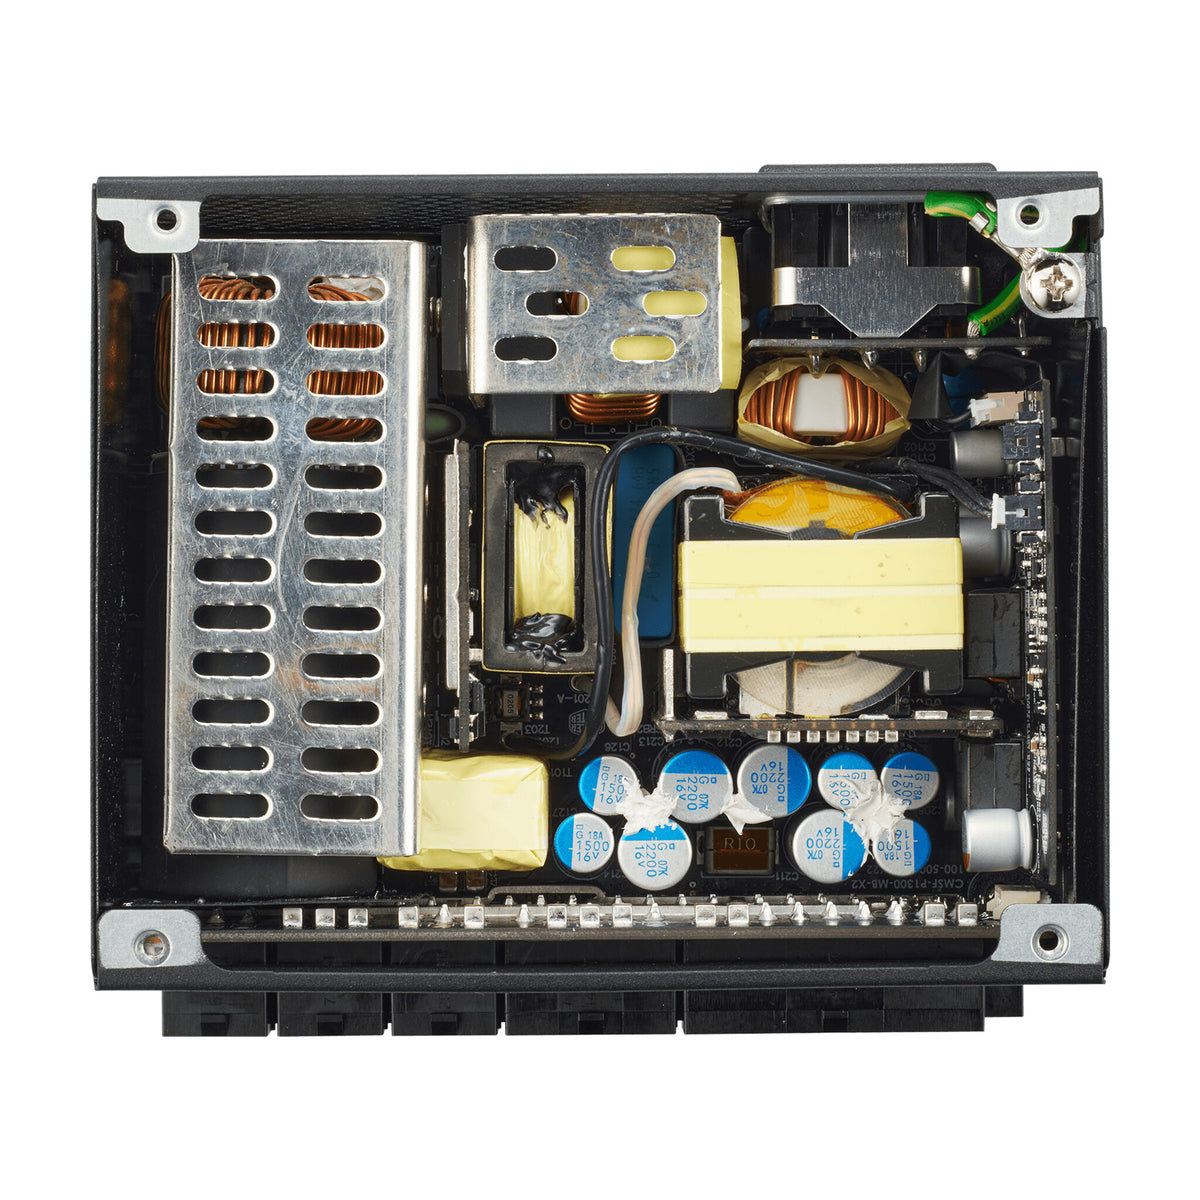 Cooler Master V SFX - 1300W 80+ Platinum Fully Modular Power Supply Unit in Black